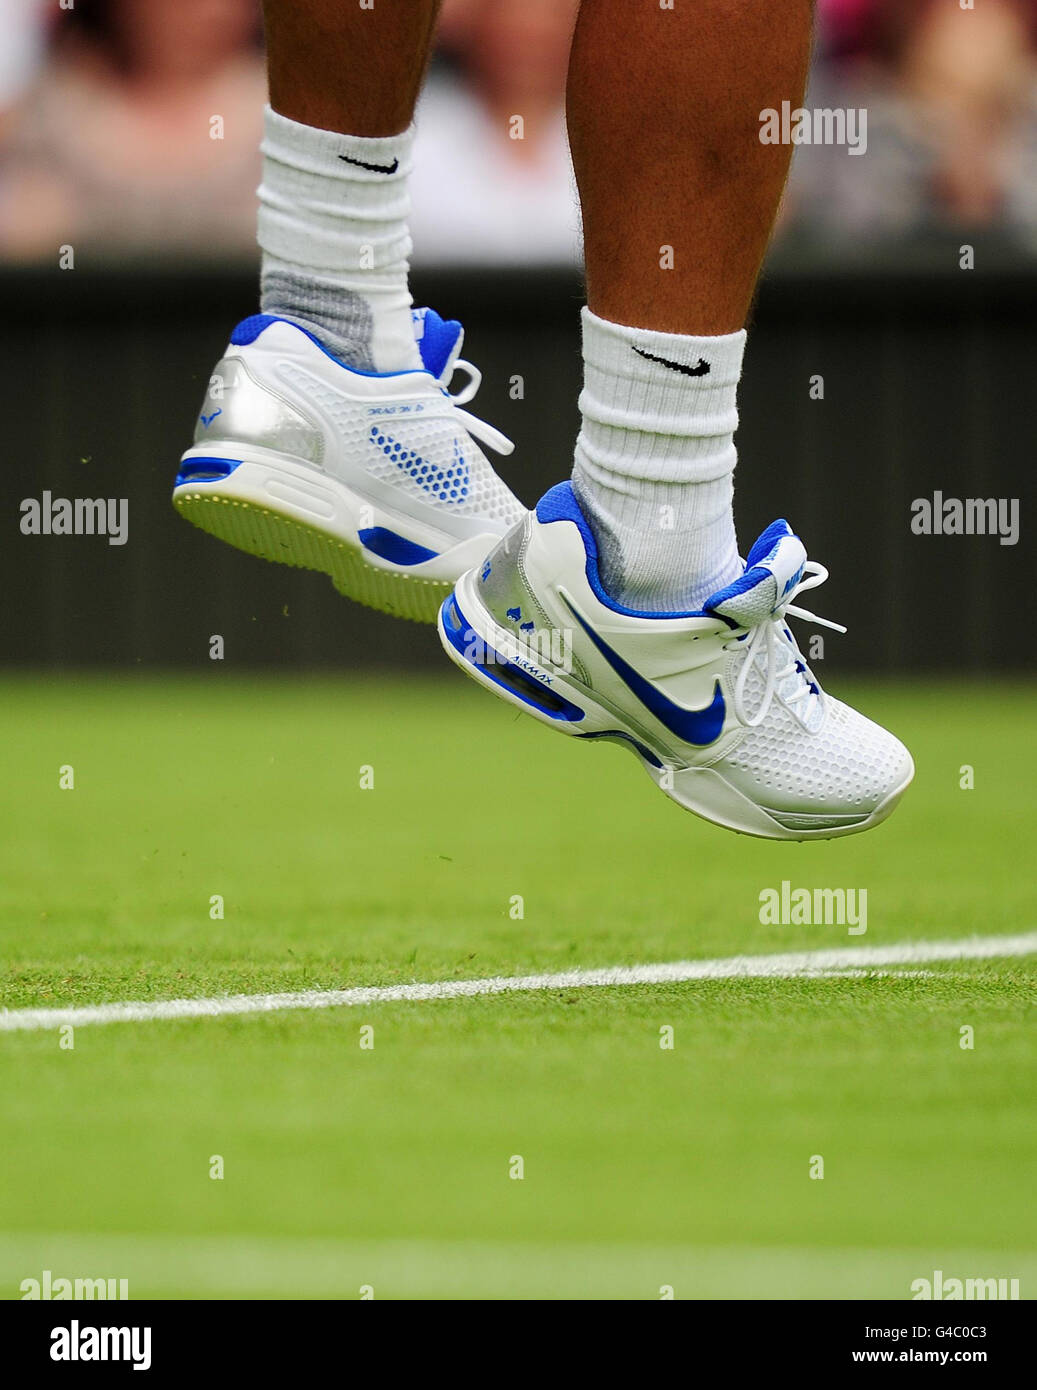 Una vista degli allenatori di Rafael Nadal mentre salta durante i Campionati di Wimbledon 2011 all'All England Lawn Tennis and Croquet Club, Wimbledon. Foto Stock